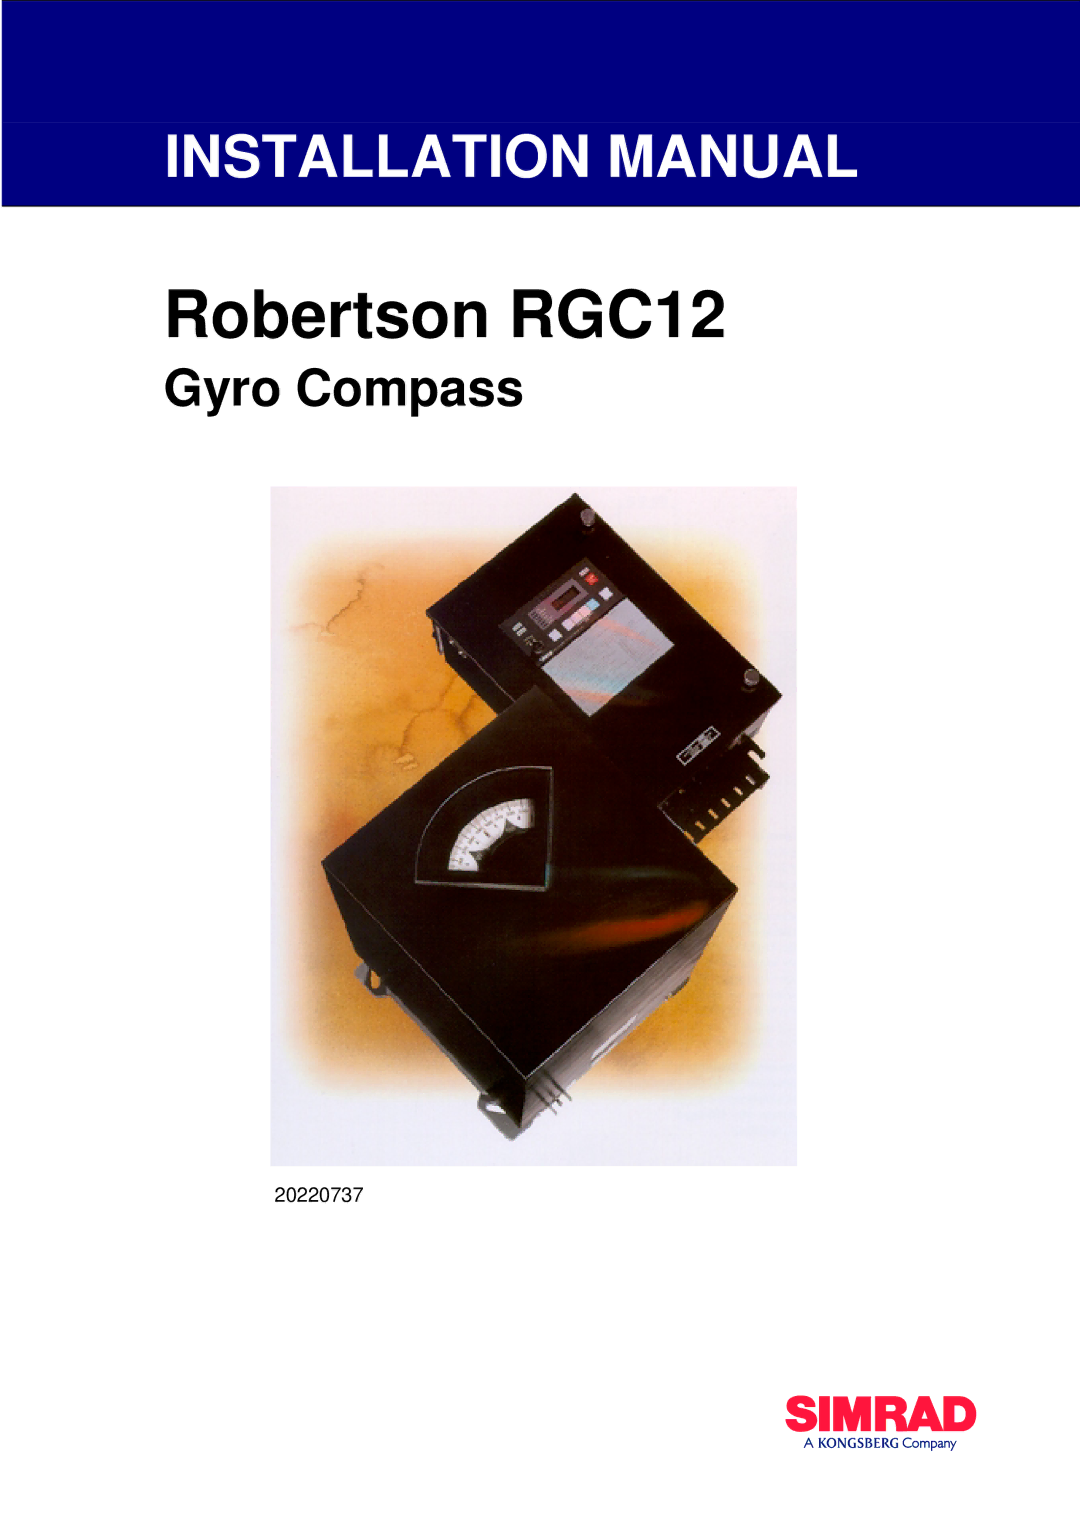 Simrad manual Robertson RGC12 